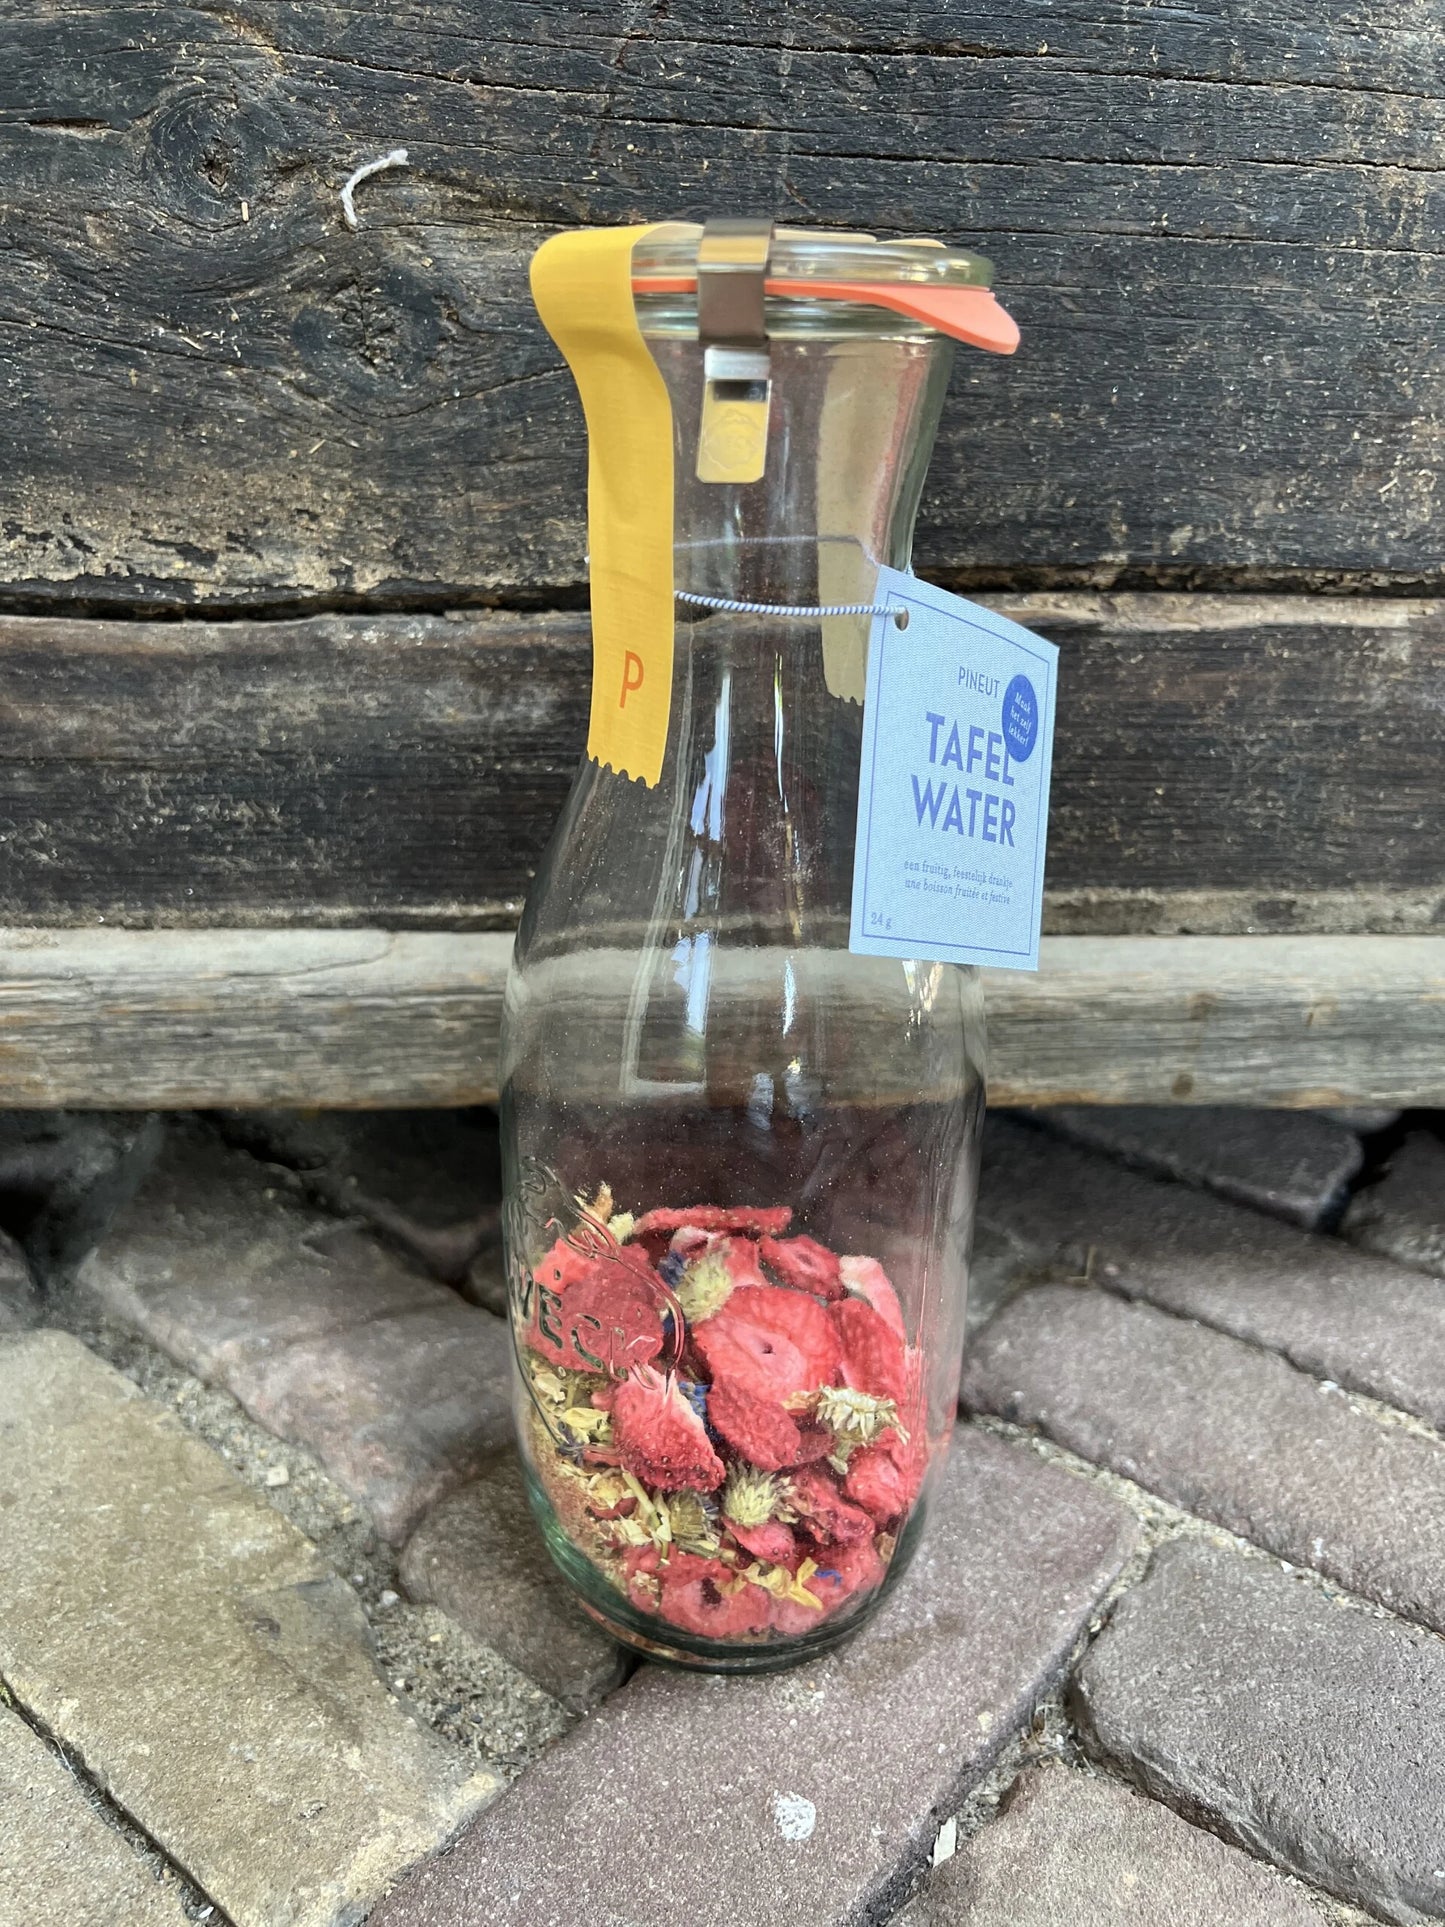 Tafel water met verse fruitsmaak — aardbei/hibiscus